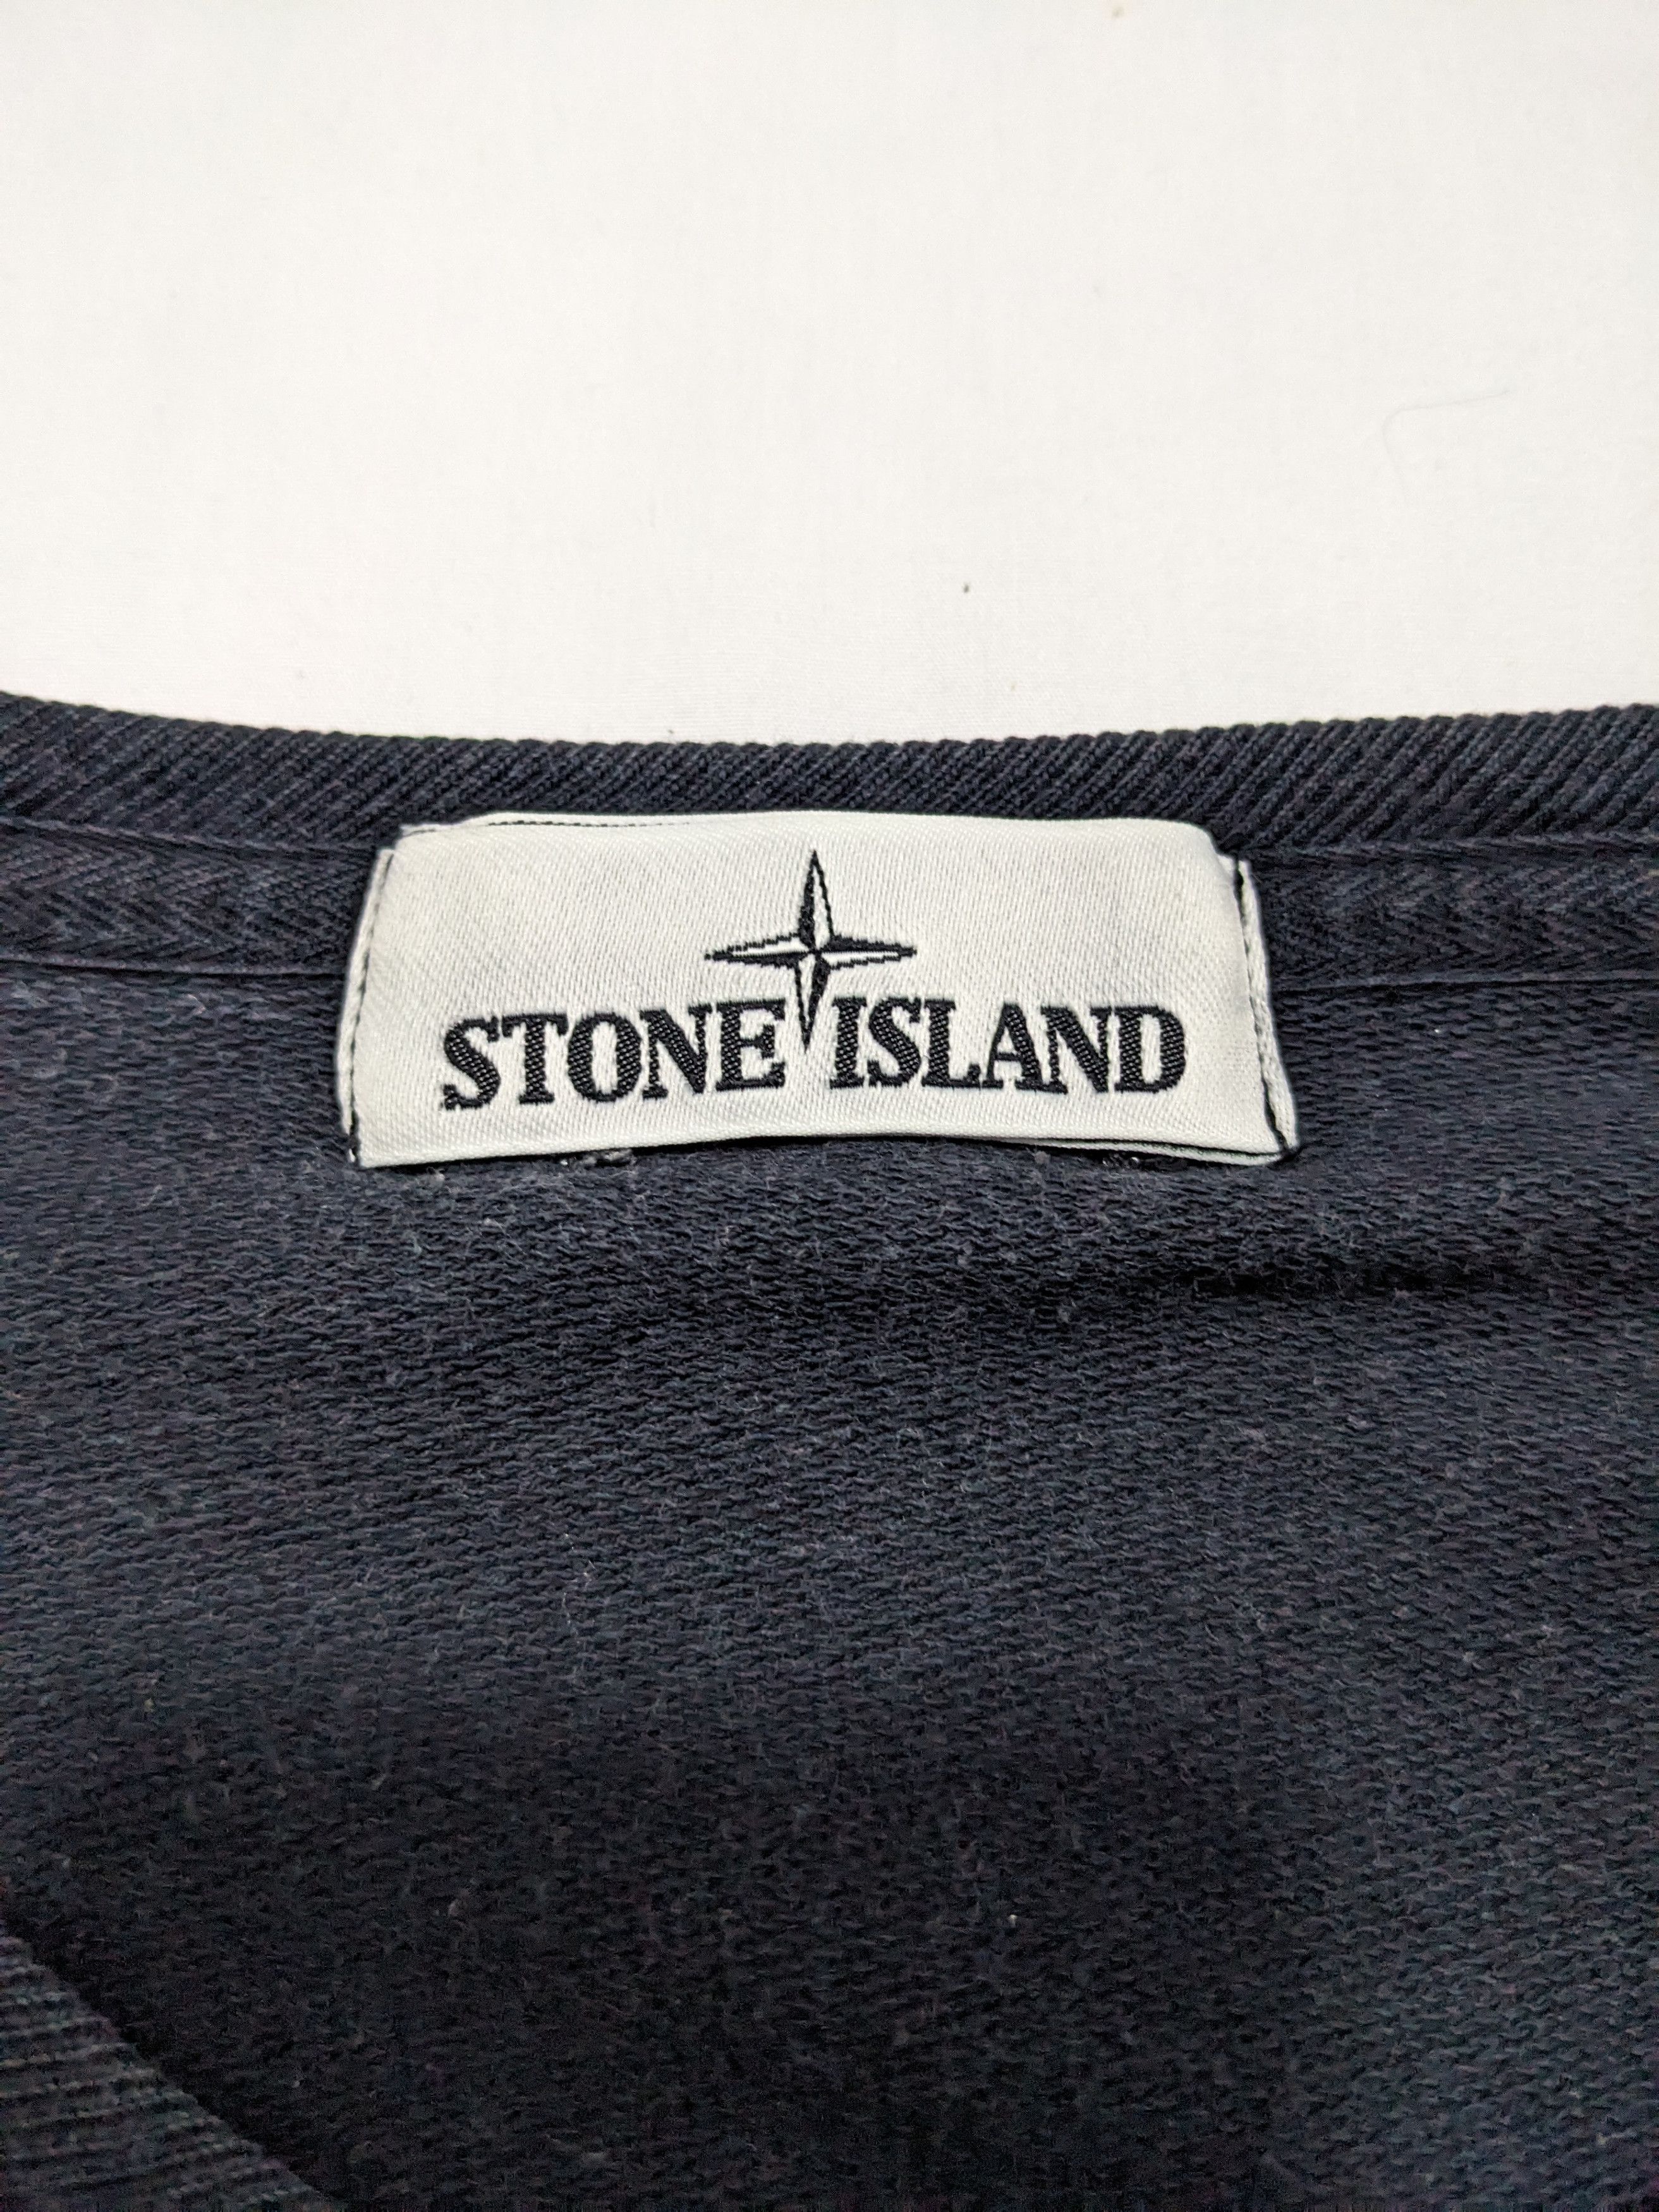 Stone Island Faded Black Sweatshirt Big Logo - 9